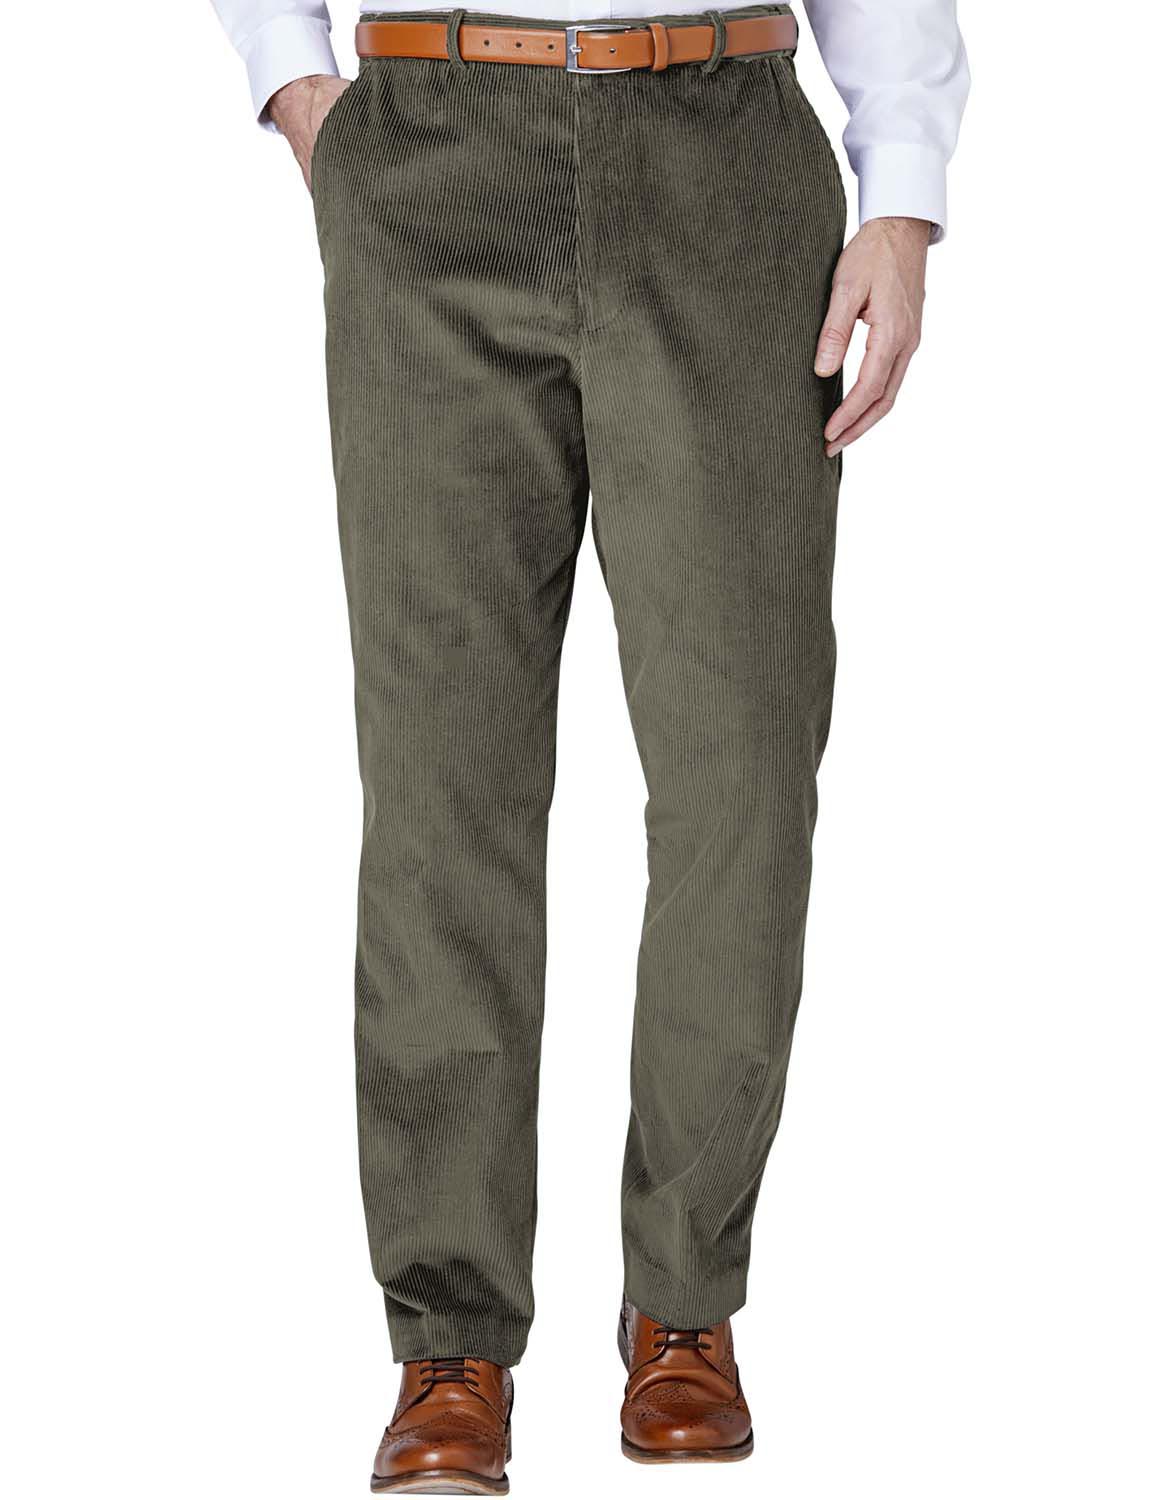 Mens Corduroy Cotton Trouser Pants With Hidden Extra Waistband | eBay